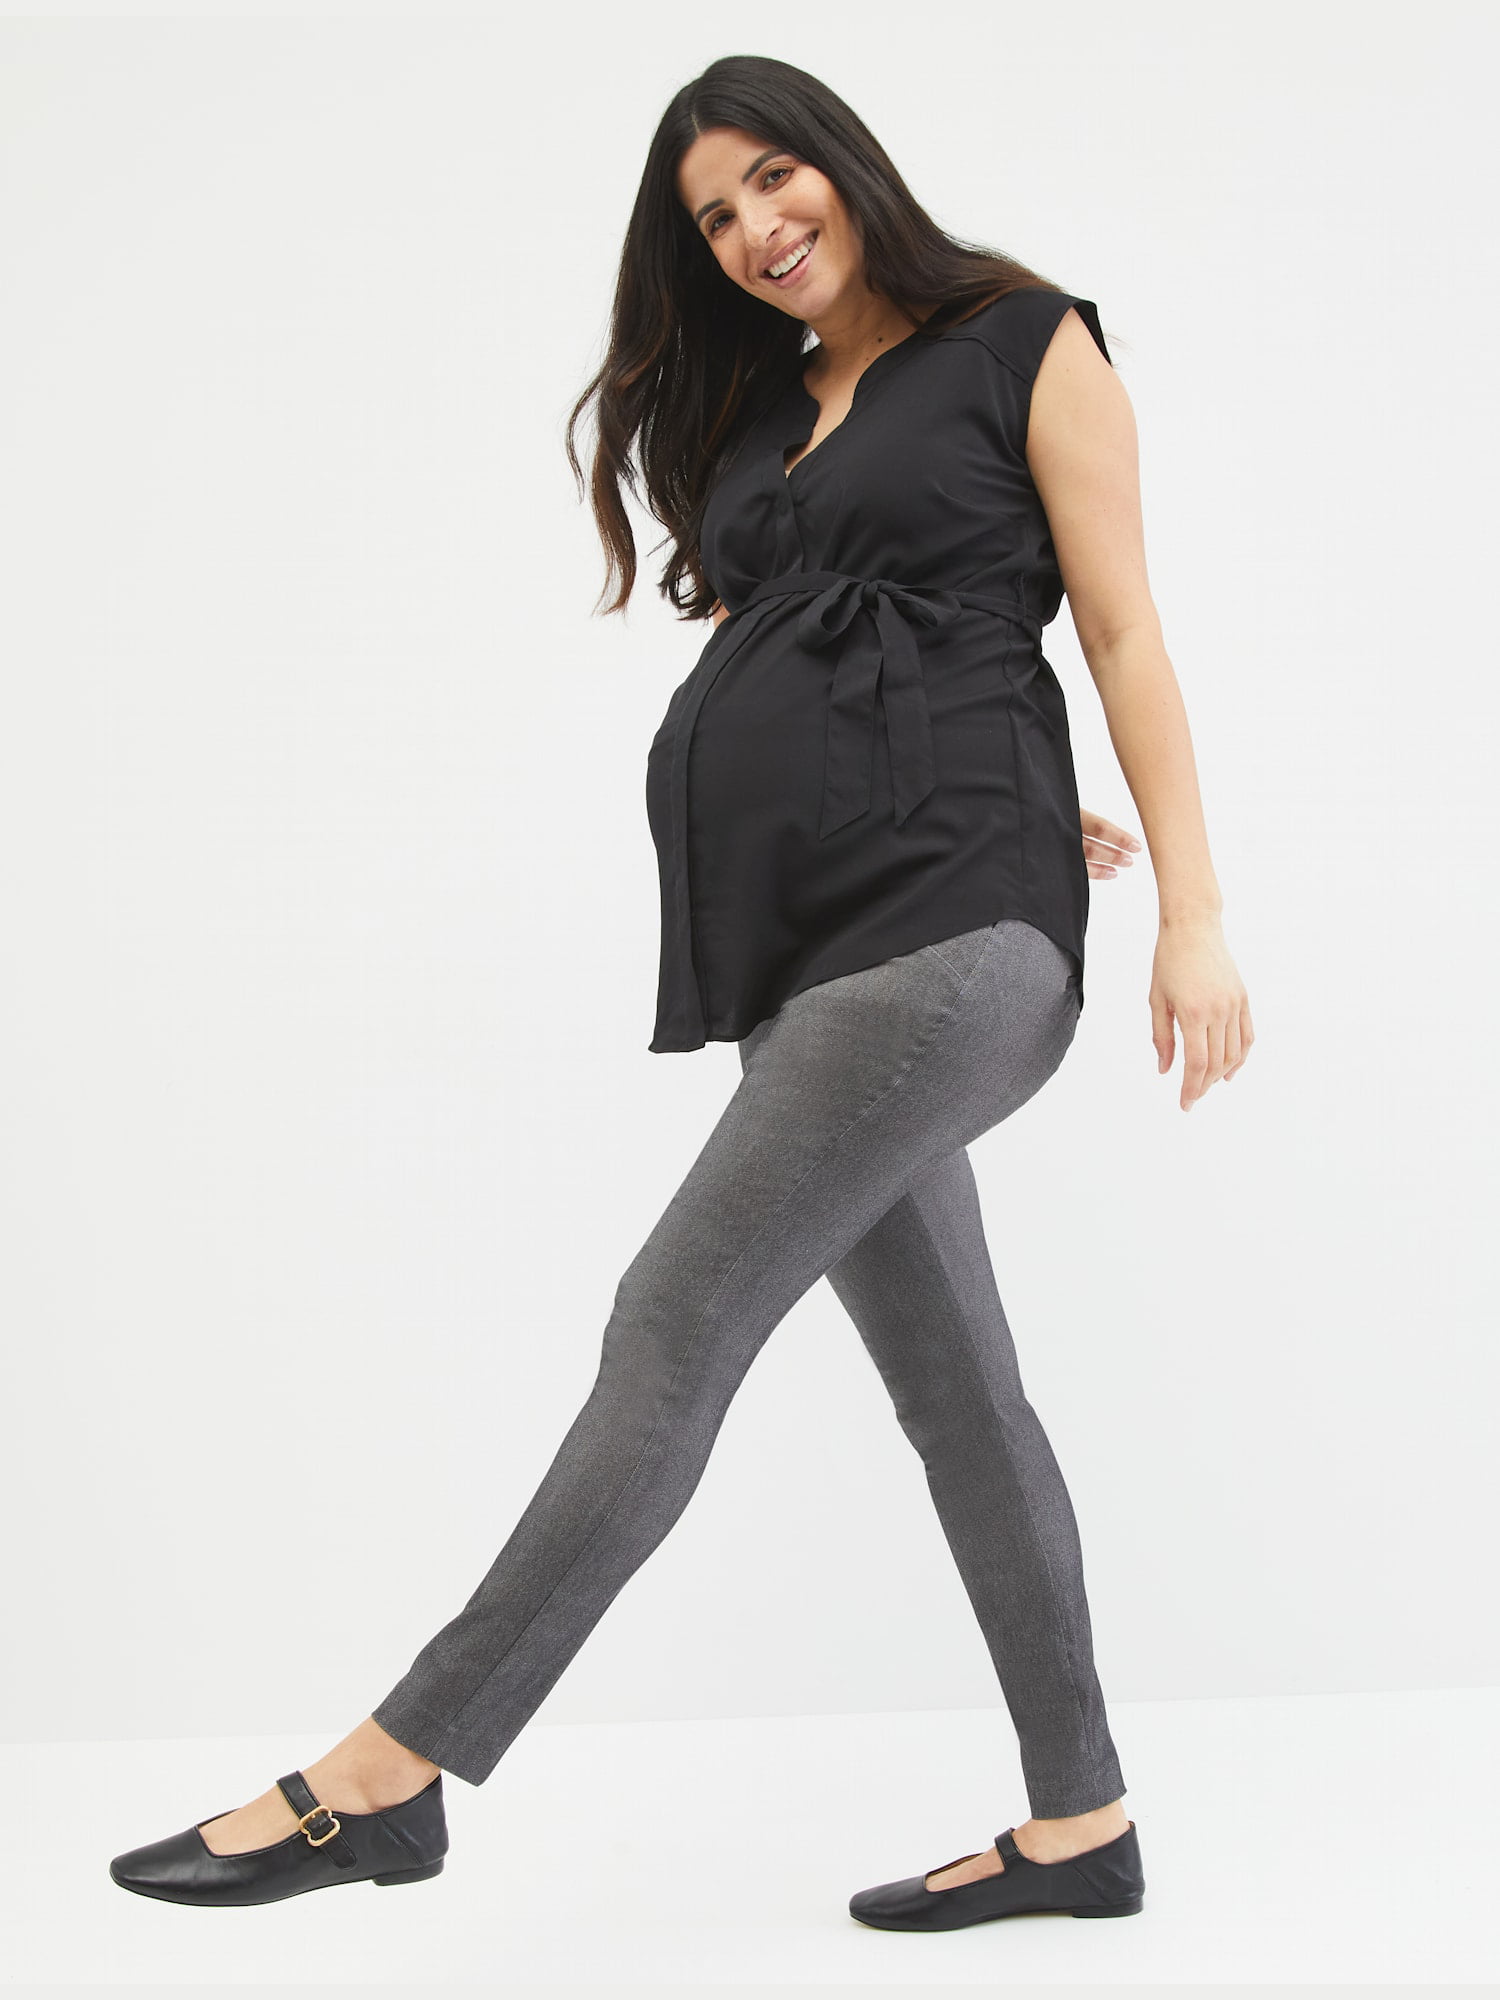 Buy Lenam Womens Stretch Fit Black Maternity Pants M at Amazonin